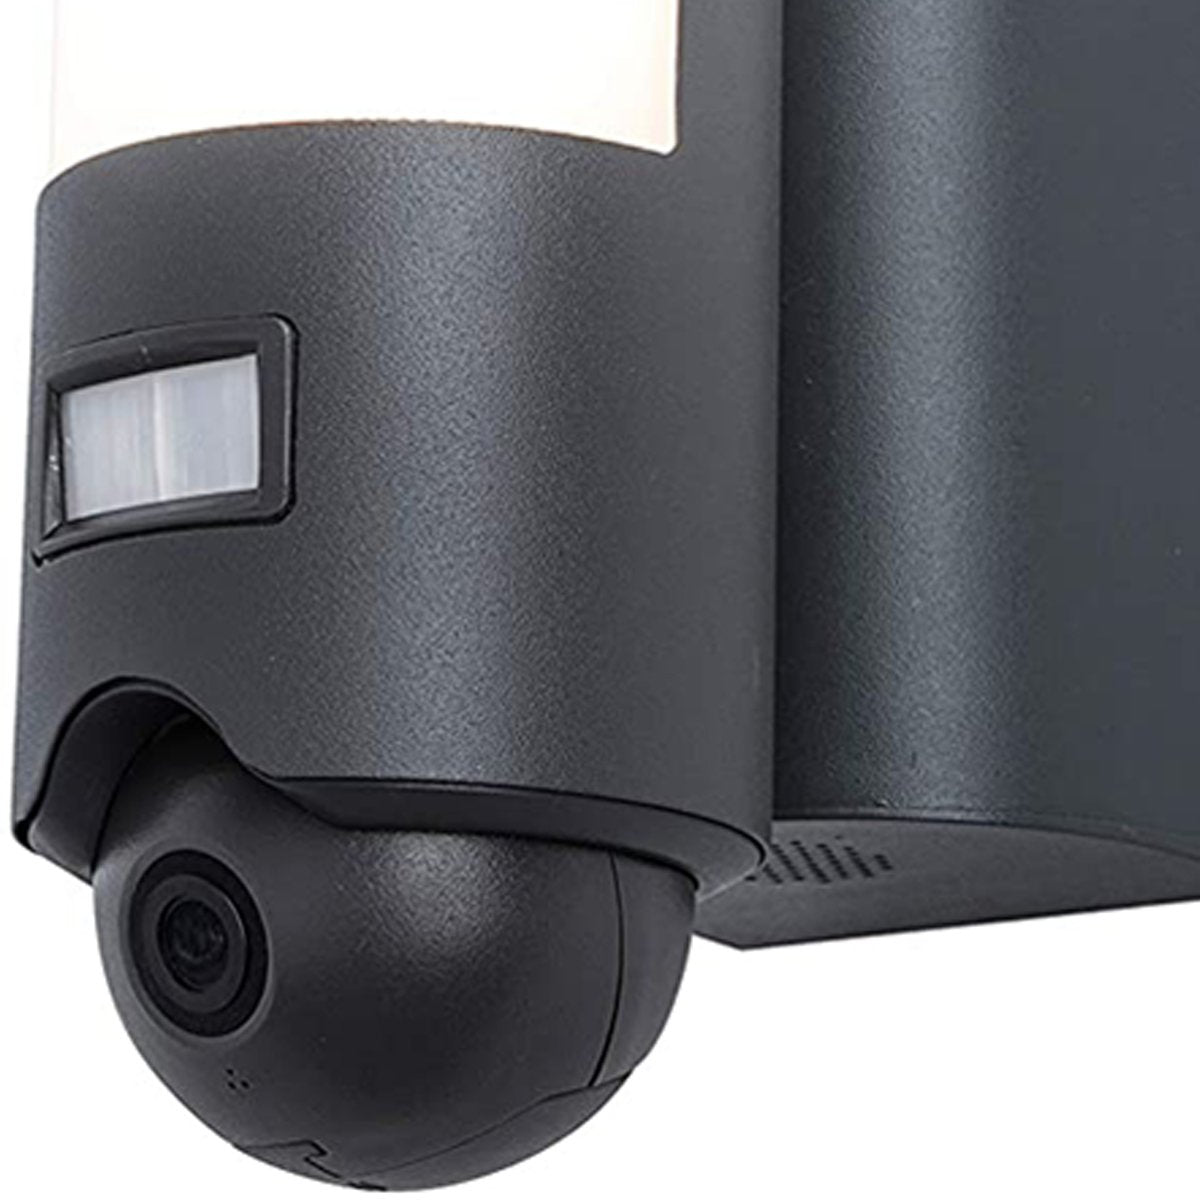 CGC JOSIE Dark Grey Cylinder Security Light With Motion Sensor And HD Video